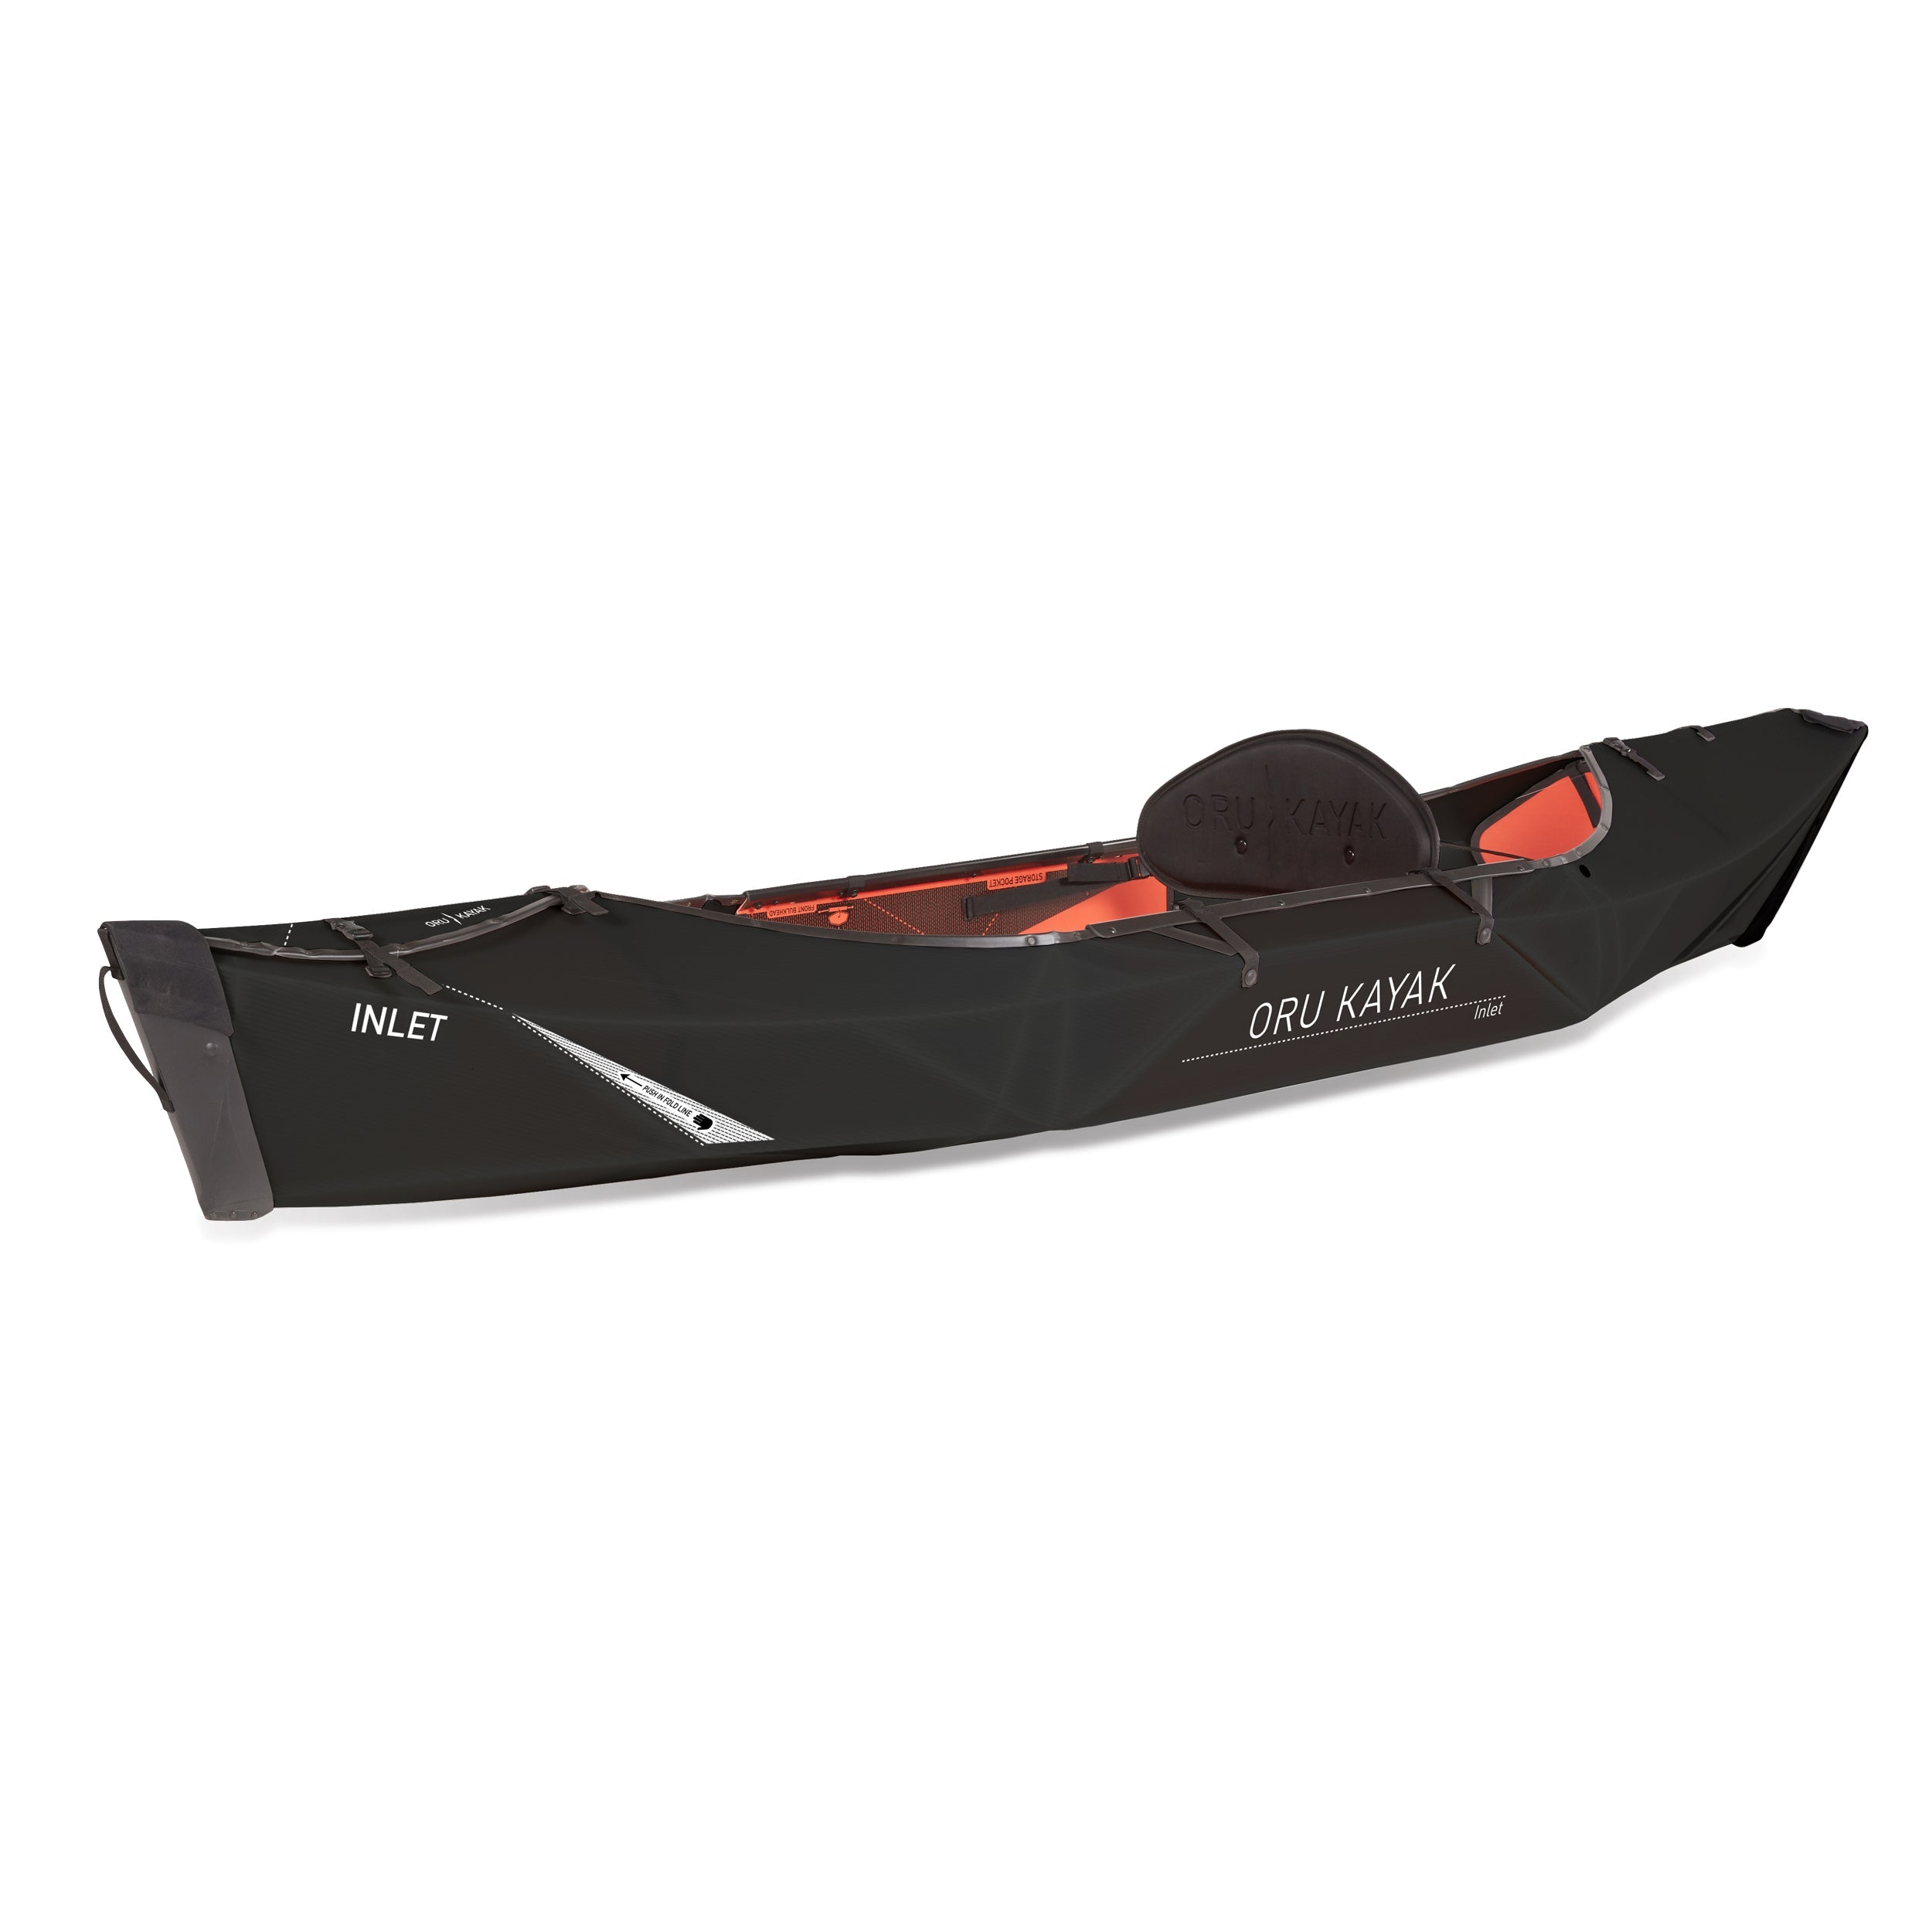 Oru - Folding Kayak - Inlet Length: 9'8", Weight: 20 lbs - Black Edition